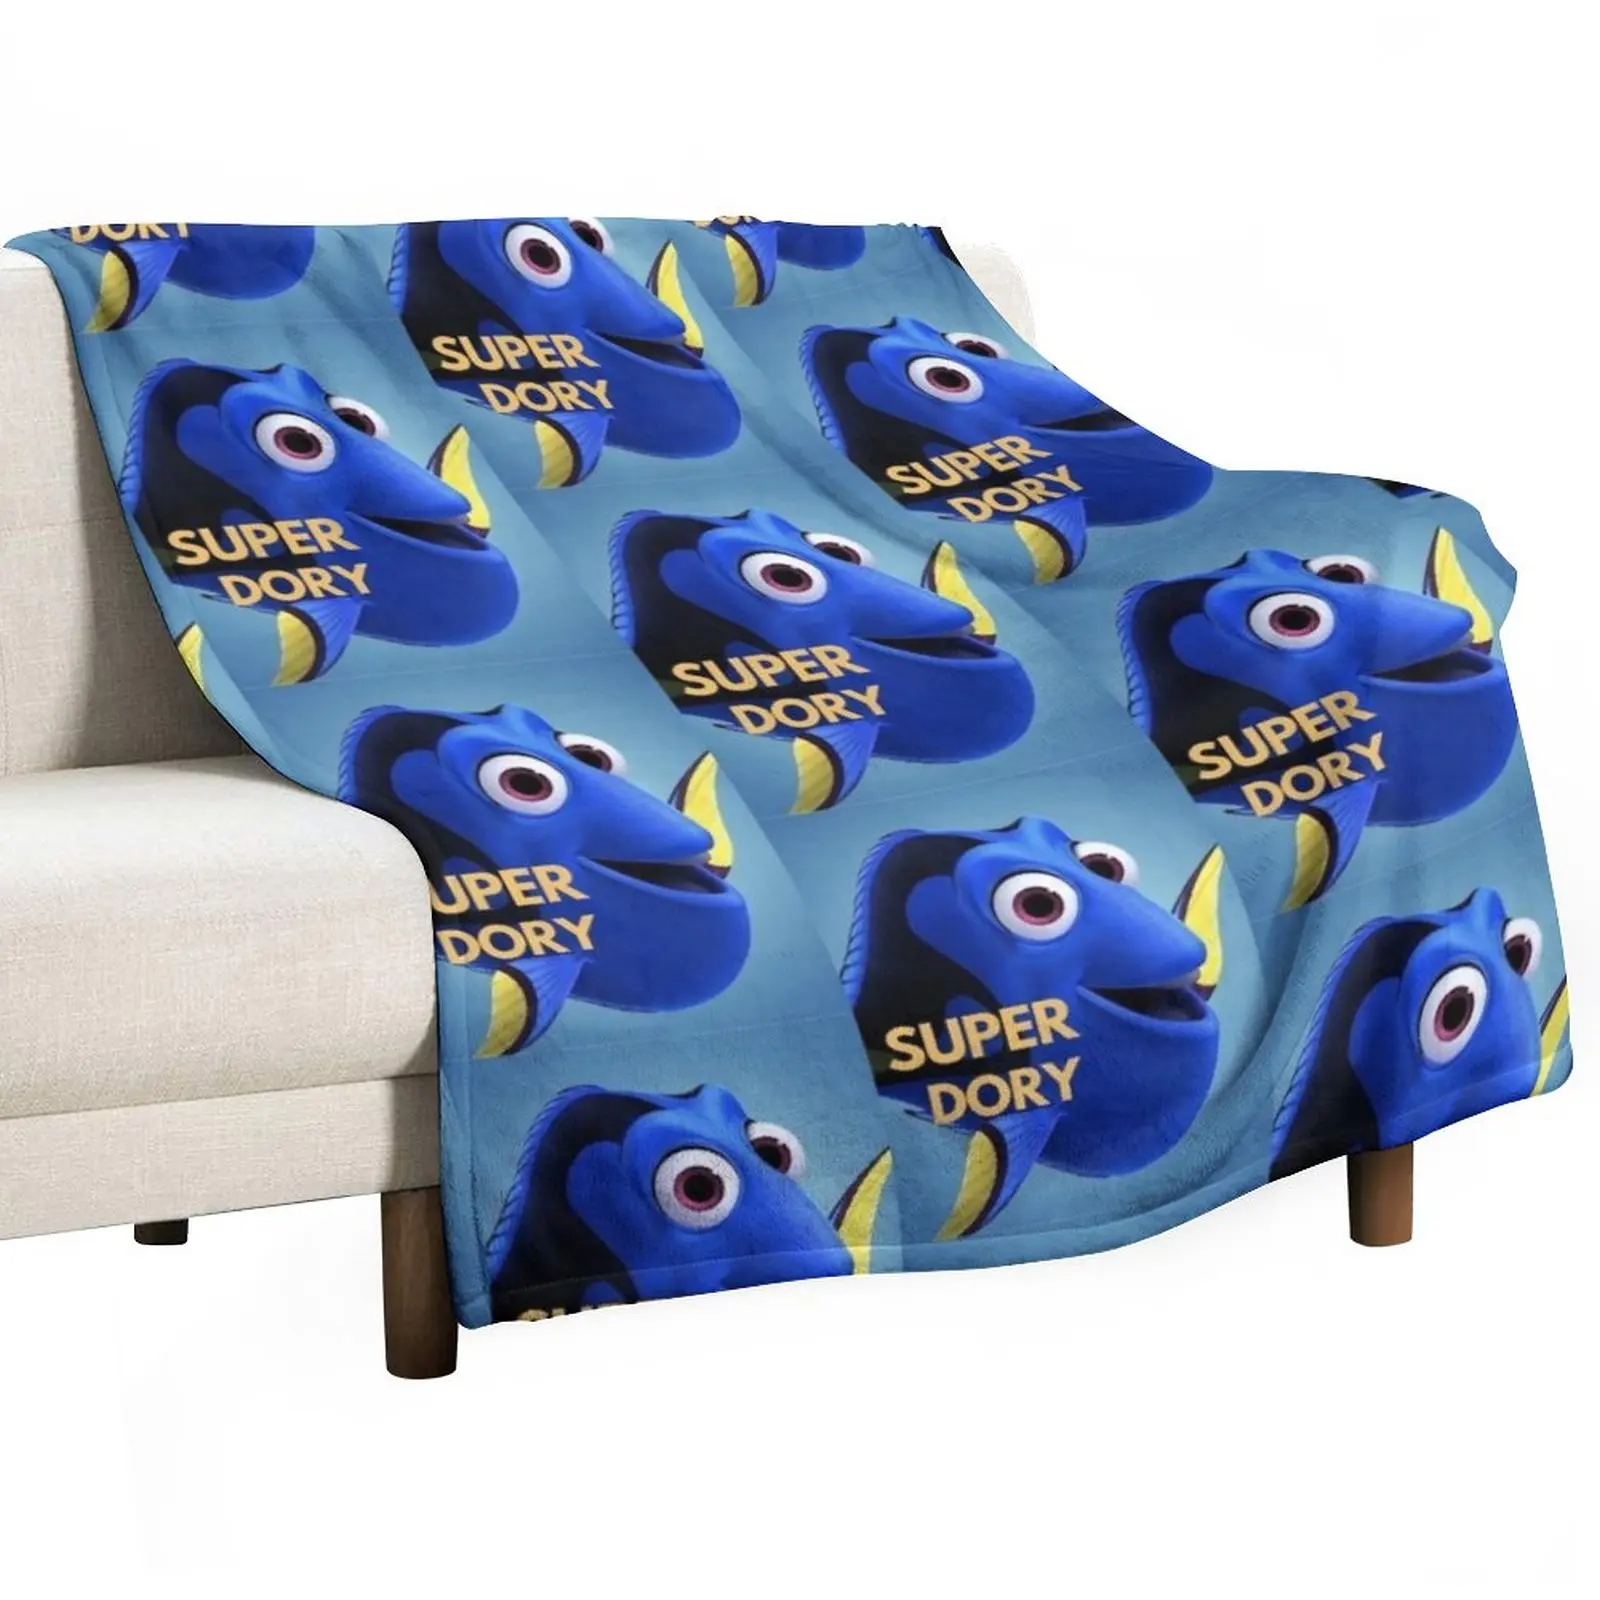 

Dory Throw Blanket Giant Sofa Blanket sofa bed Hairy Blanket Furry Blankets